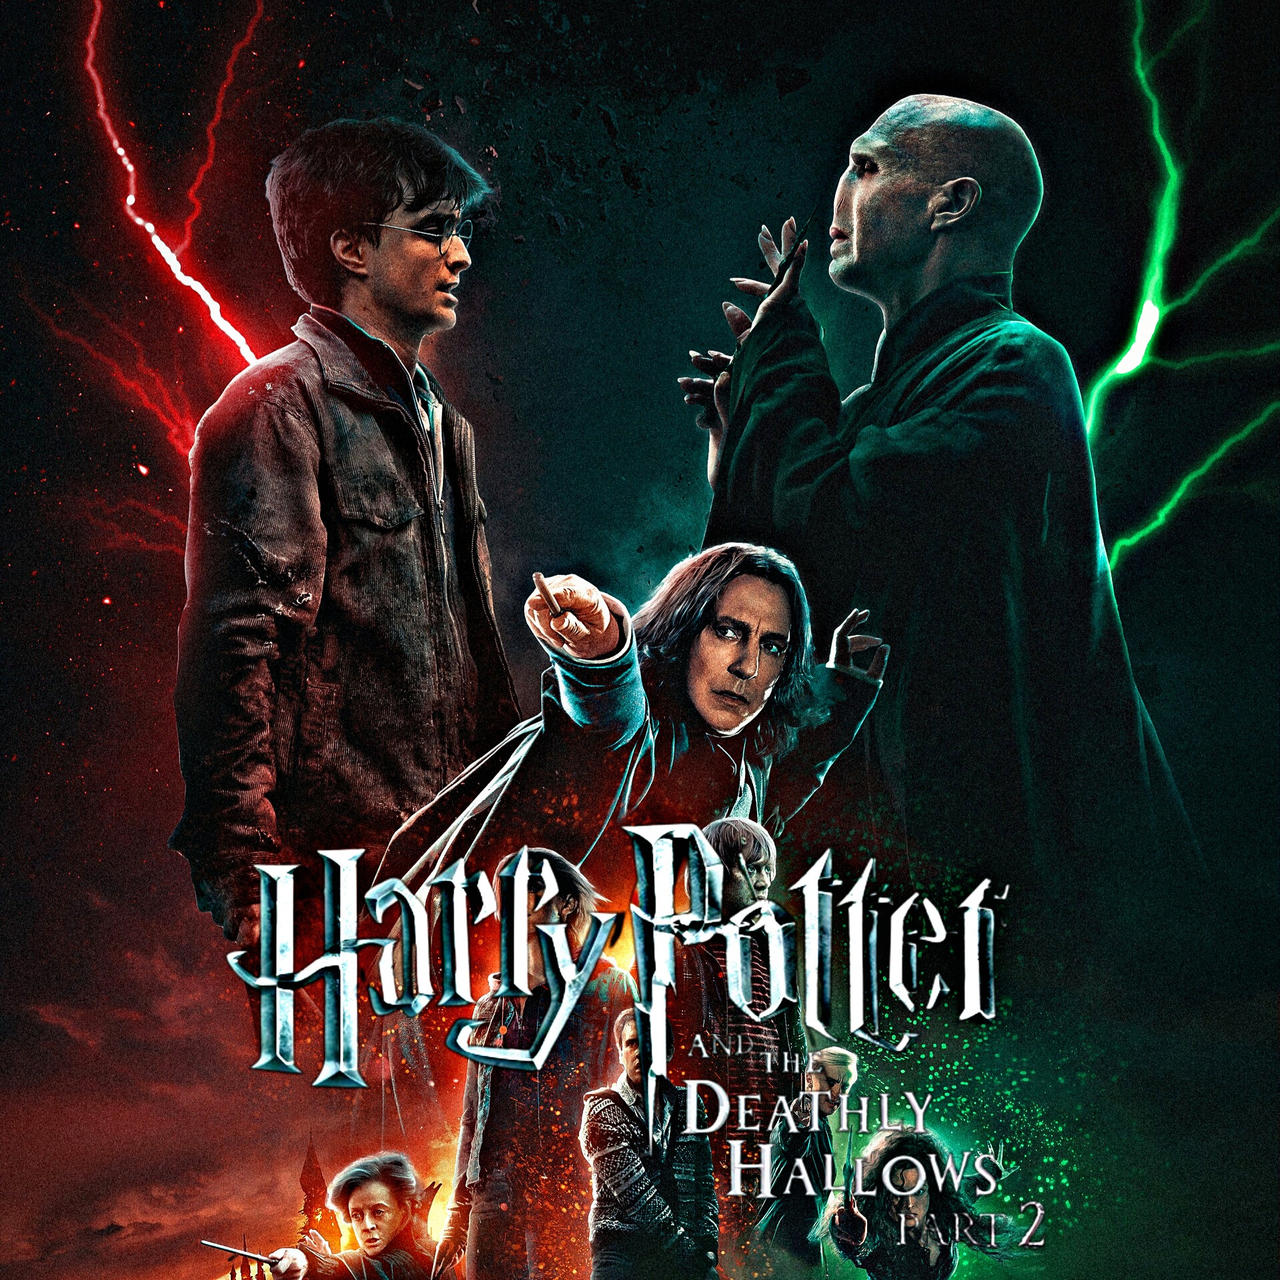 Art Print Poster Harry Potter: Deathly Hallows Part 2 Movie Film